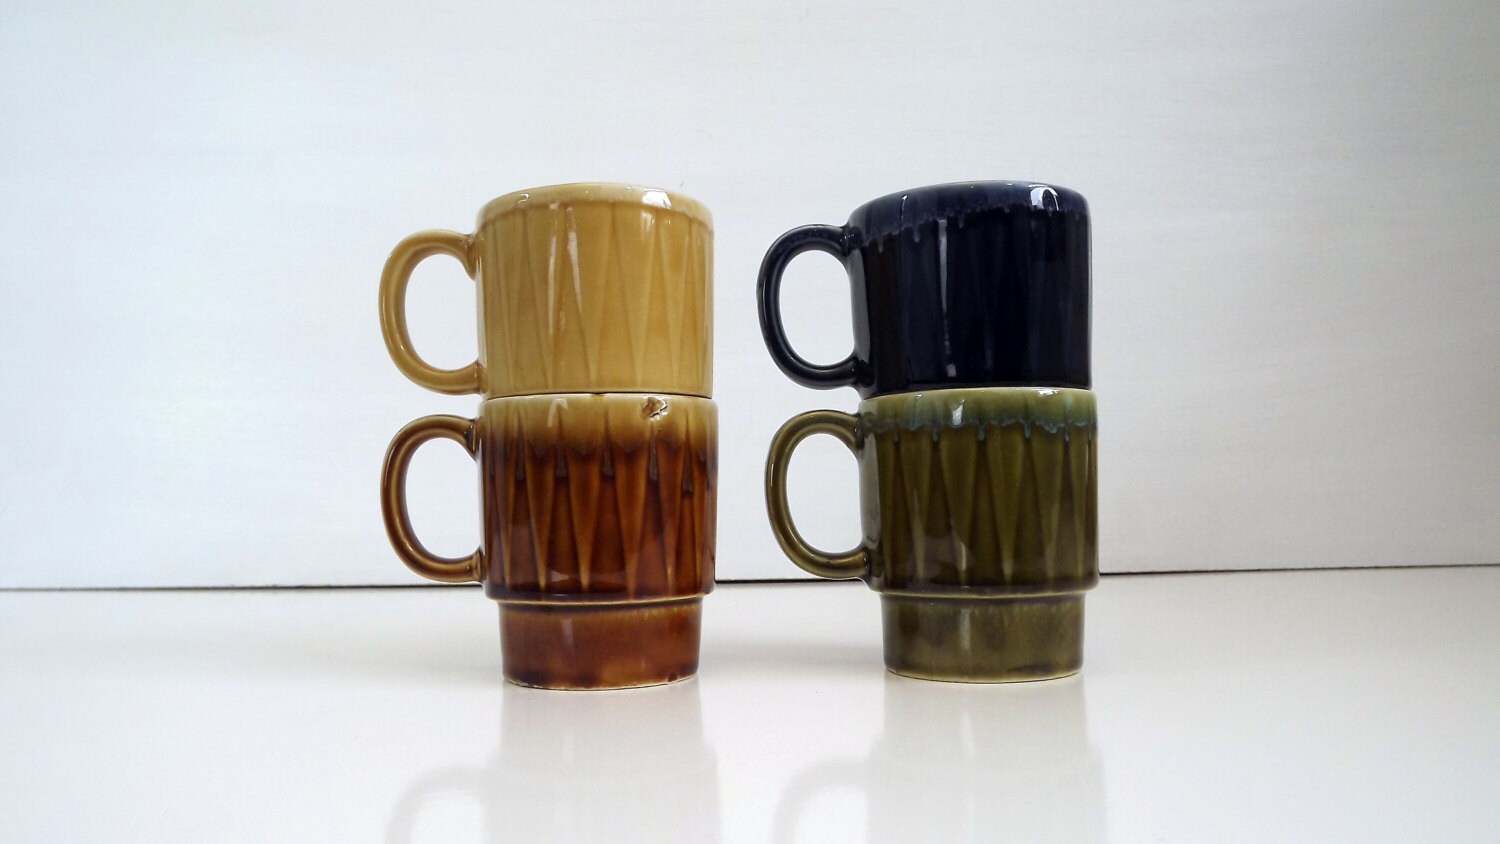 Ceramic Stackable Japanese Coffee Mugs (Set of 4)